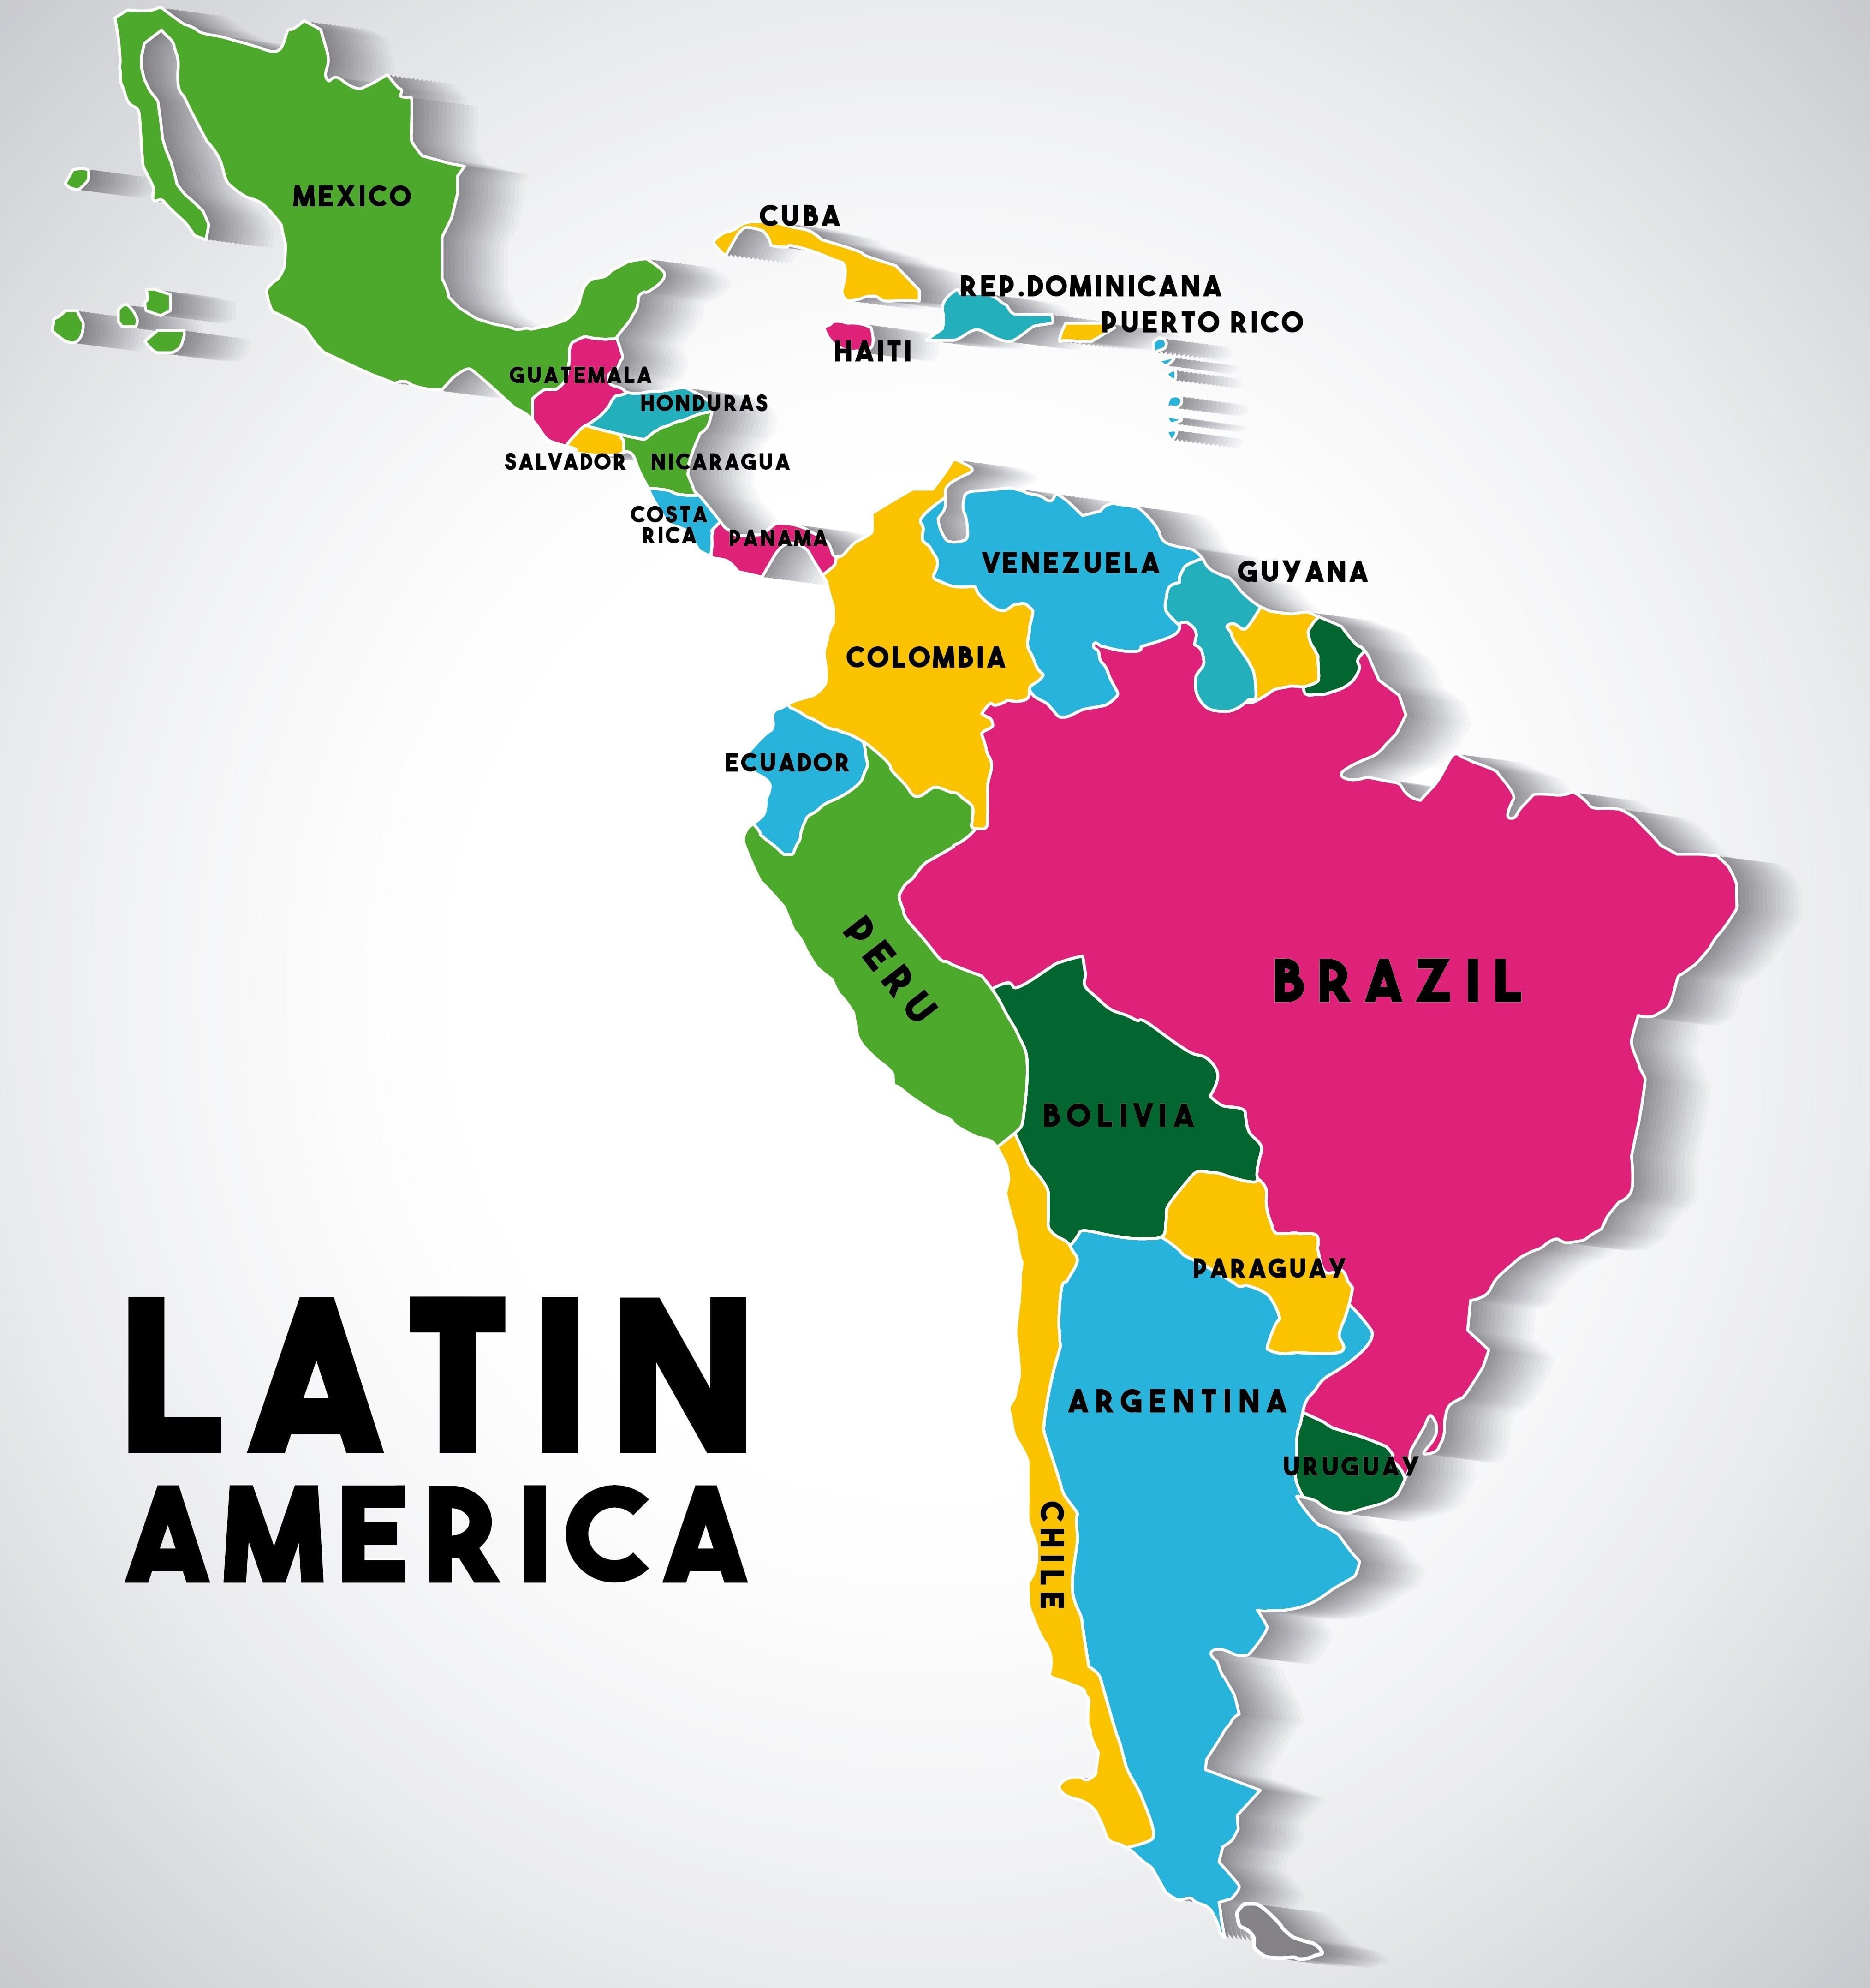 South american country. Карта стран Латинской Америки карта. Латинская Америка географическая карта. Карта Латинской Америки со странами.